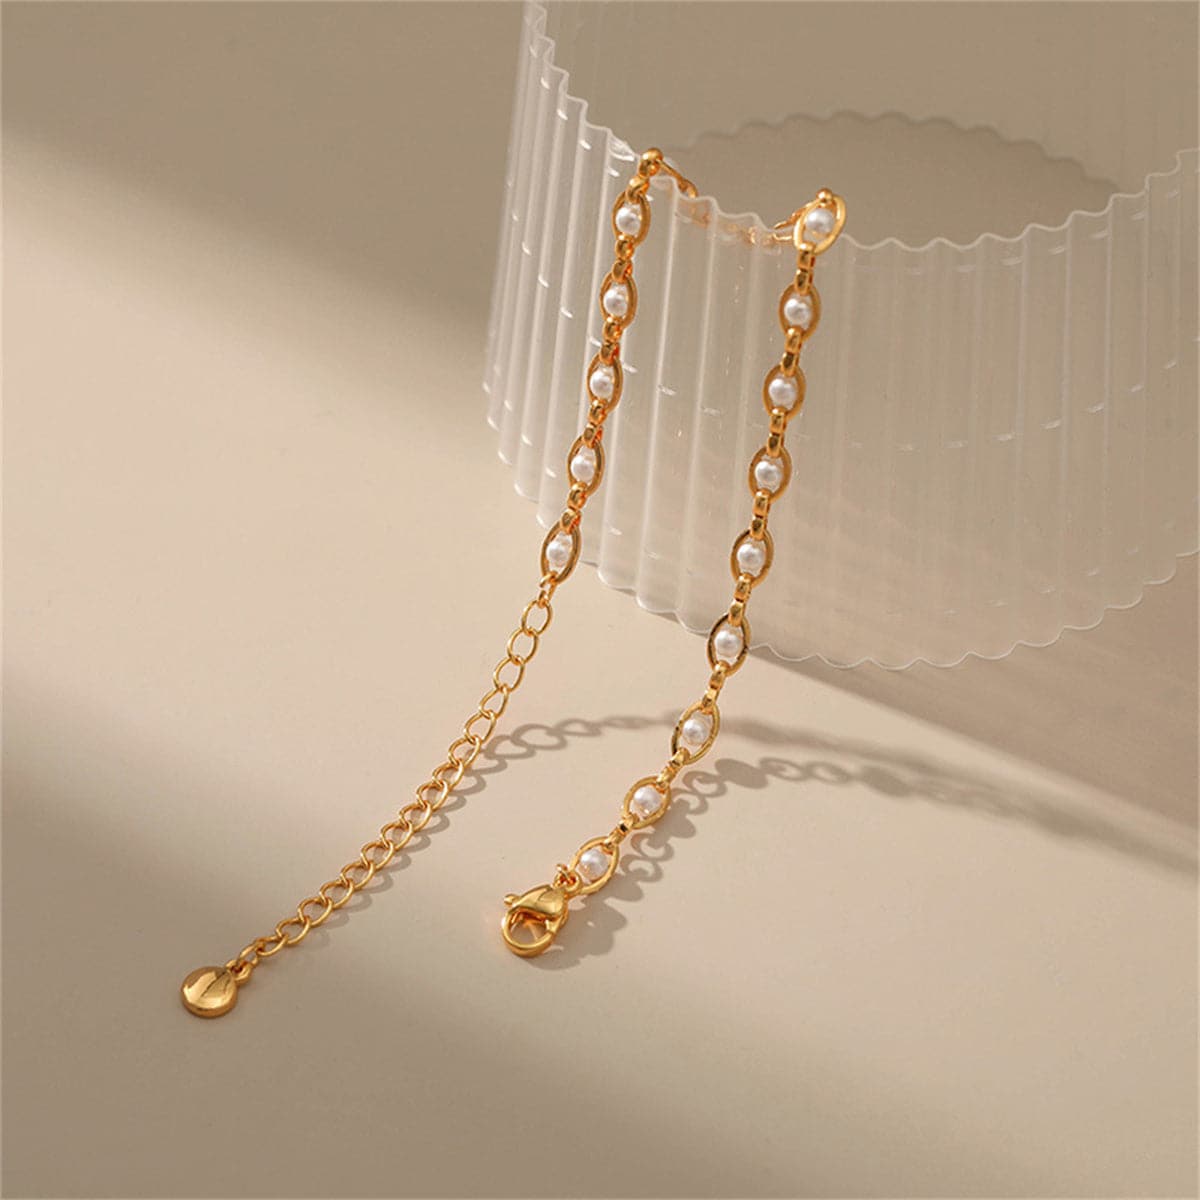 White Pearl & 18K Gold-Plated Eye Chain Bracelet